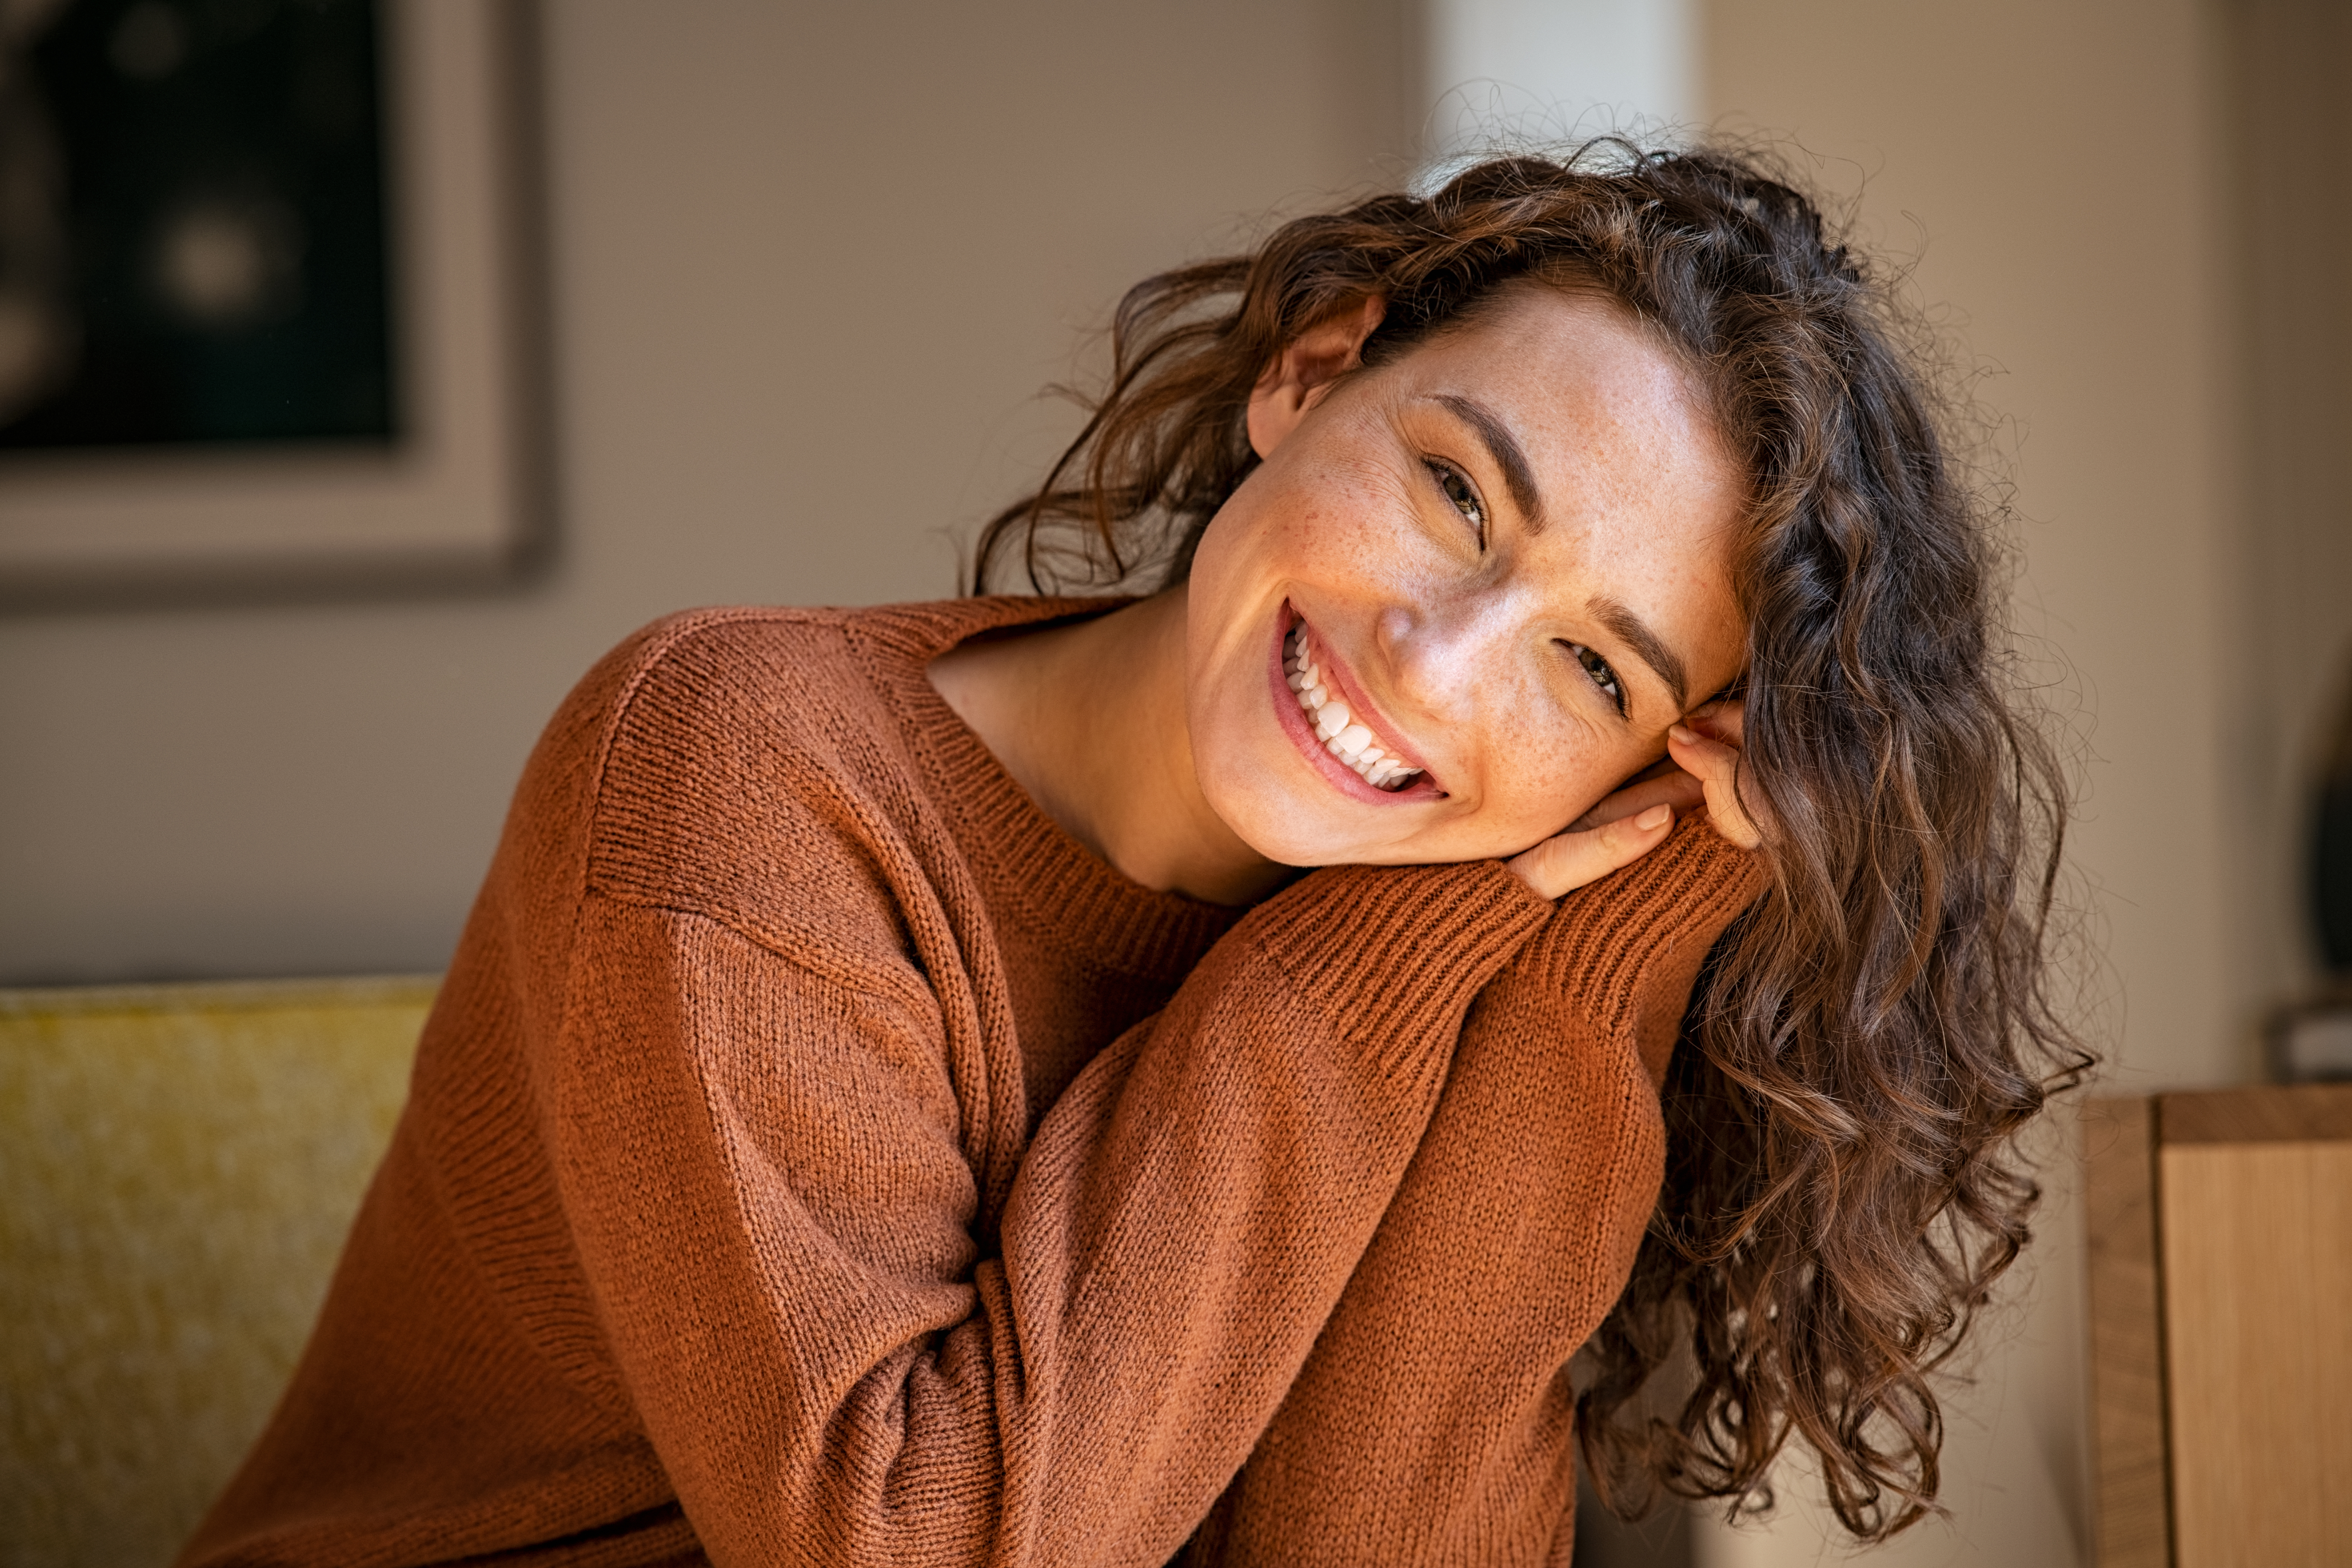 Une jeune femme heureuse | Source : Shutterstock